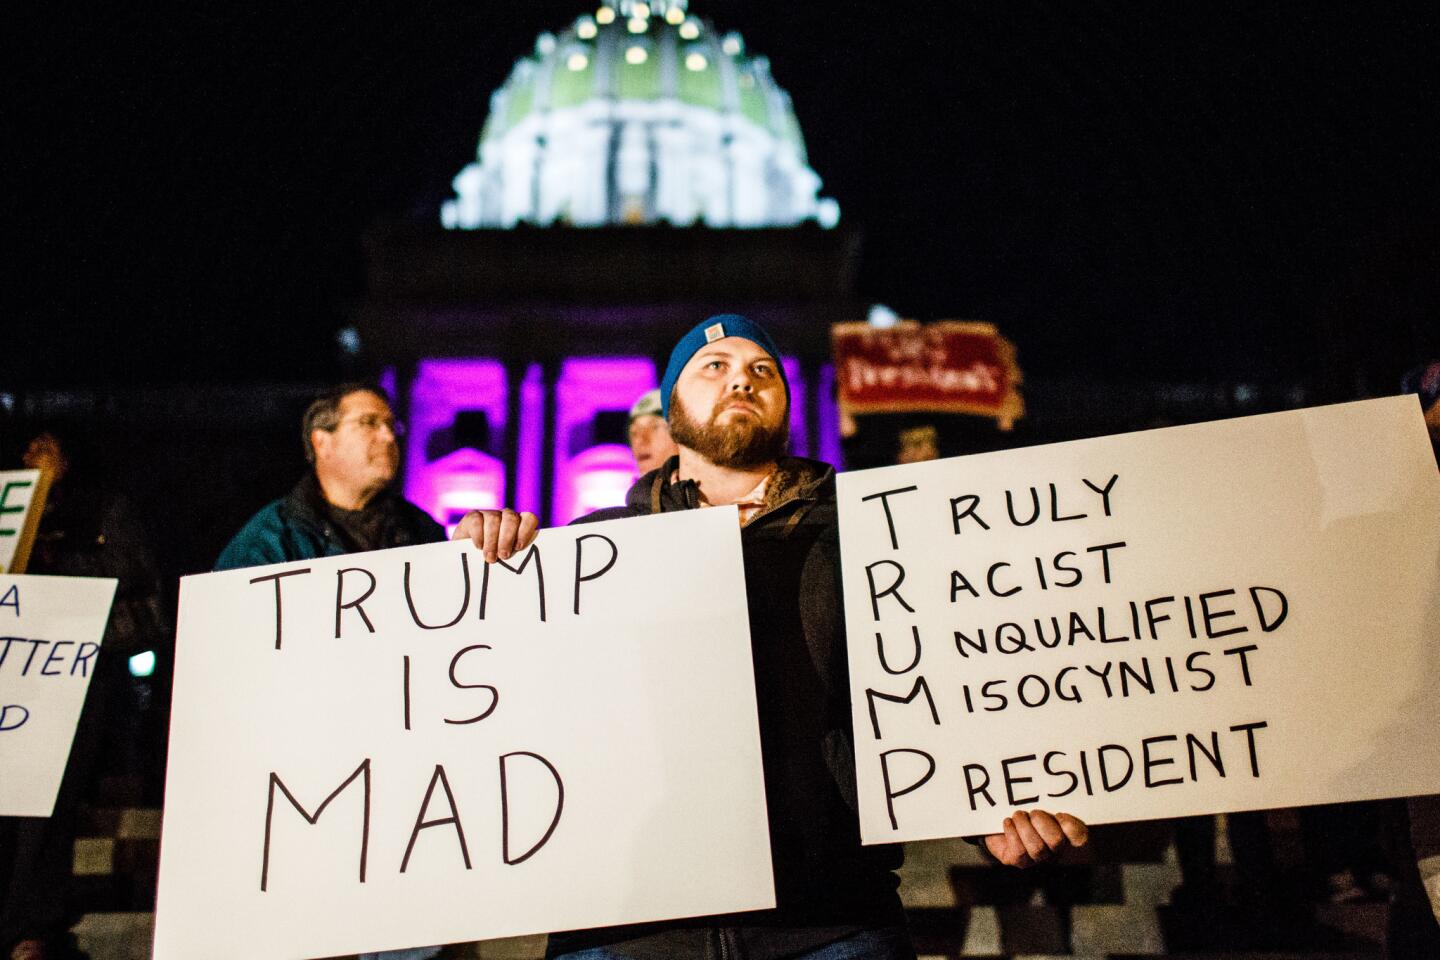 Trump protests